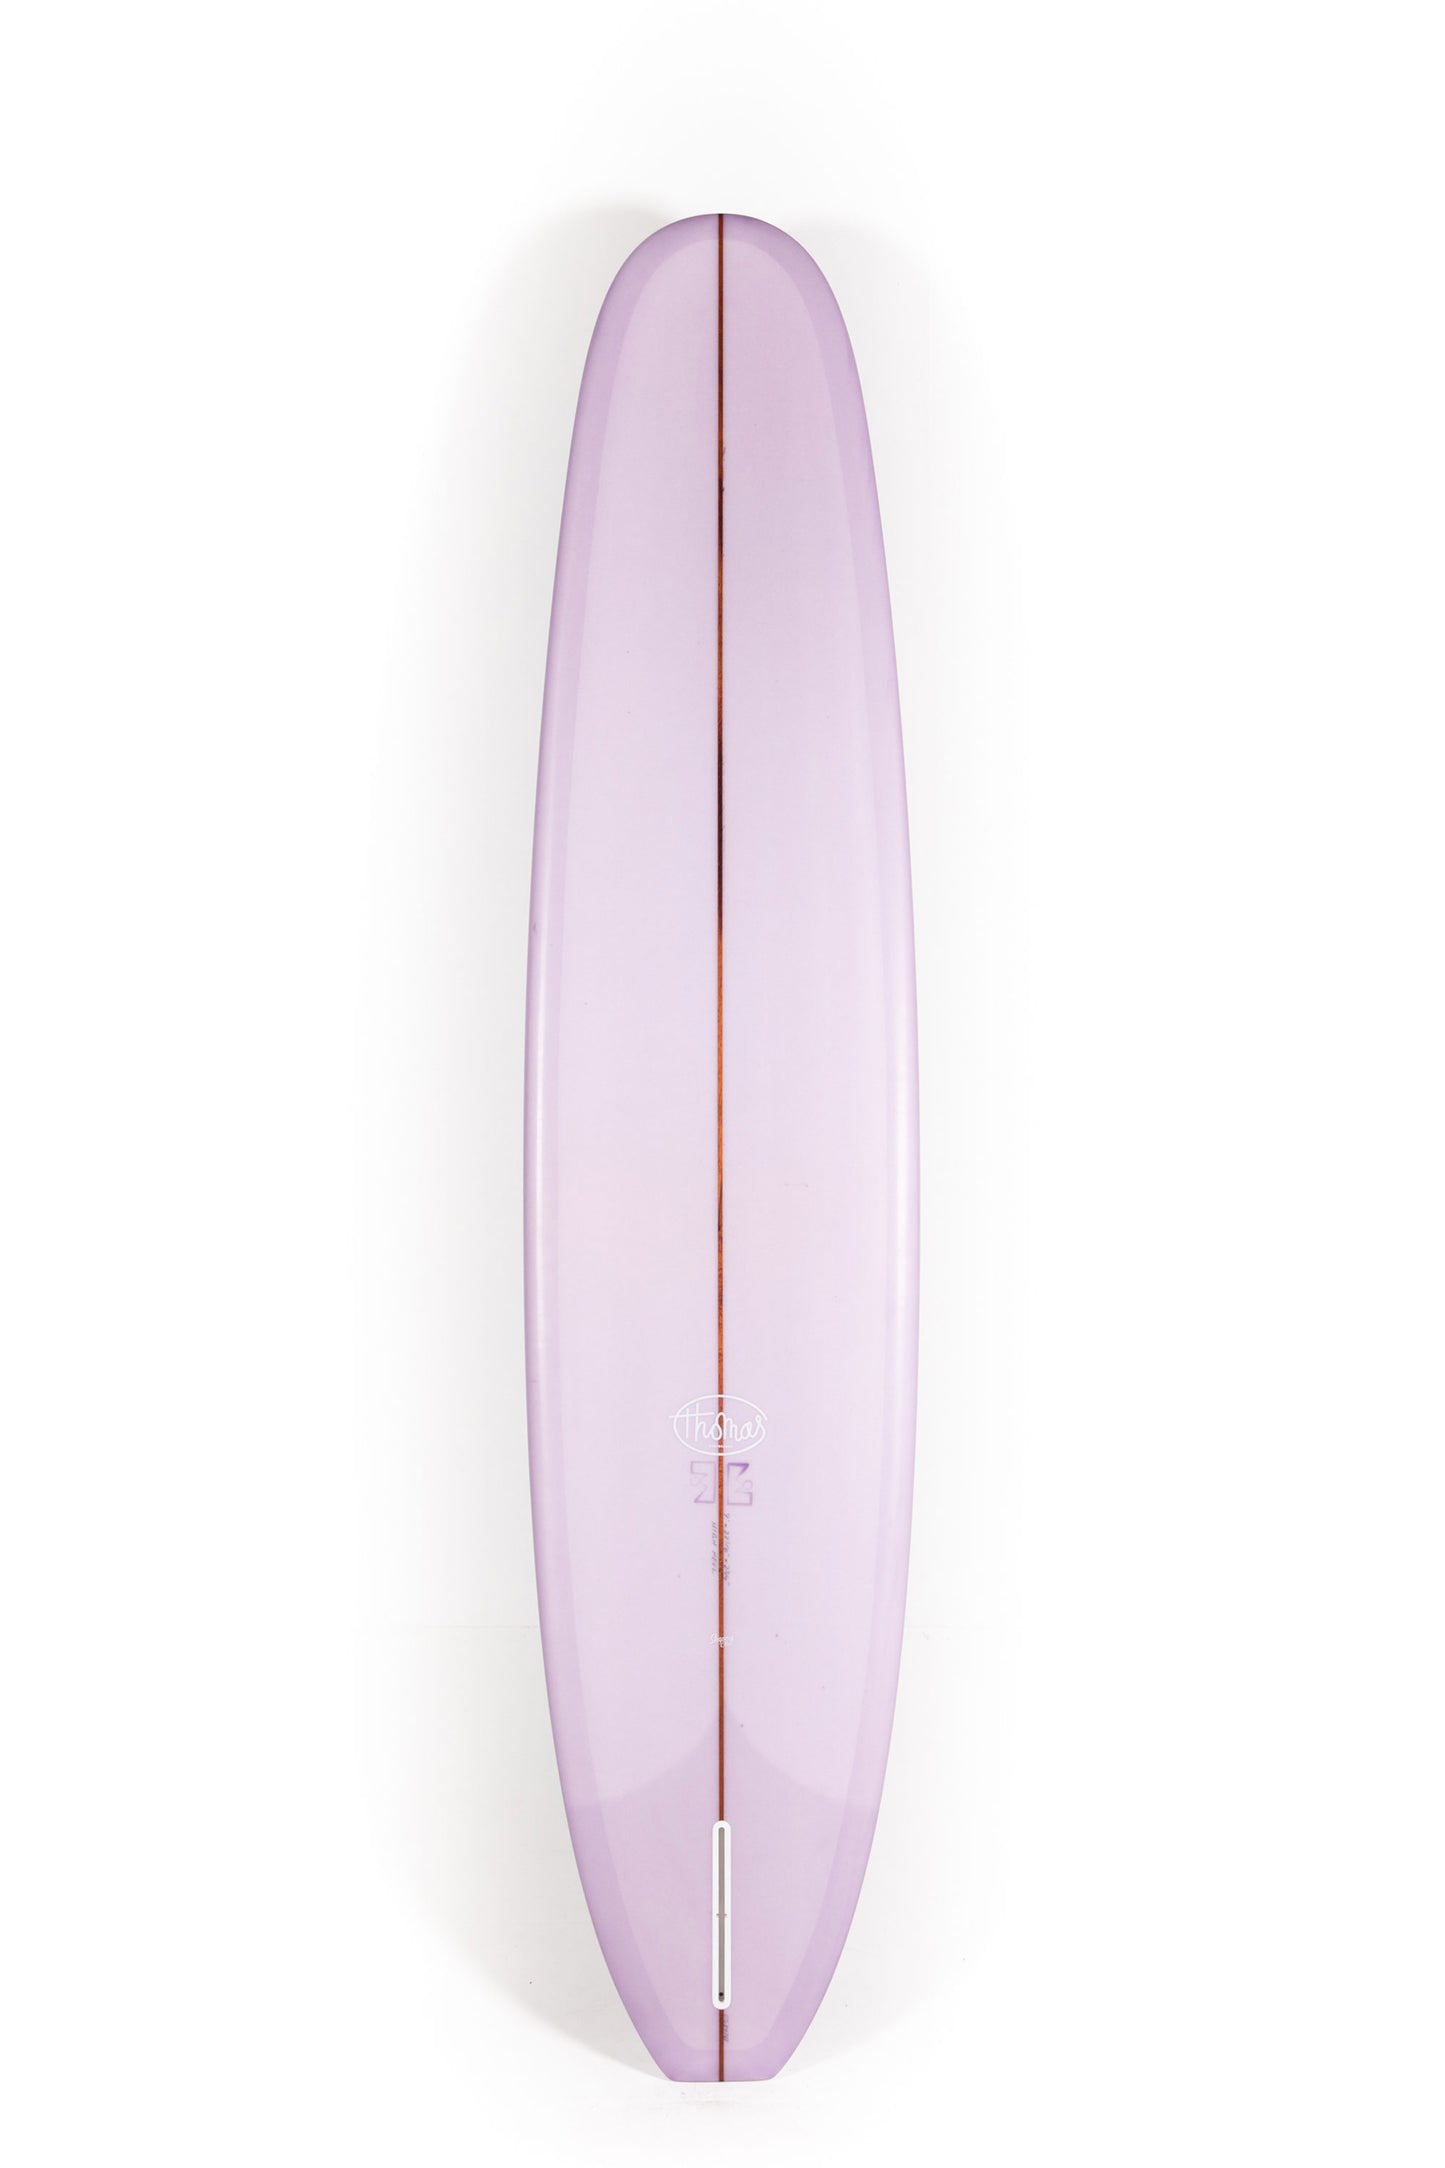 Pukas-Surf-Shop-Thomas-Bexon-Surfboards-High-Heel-Thomas-Bexon-9_0